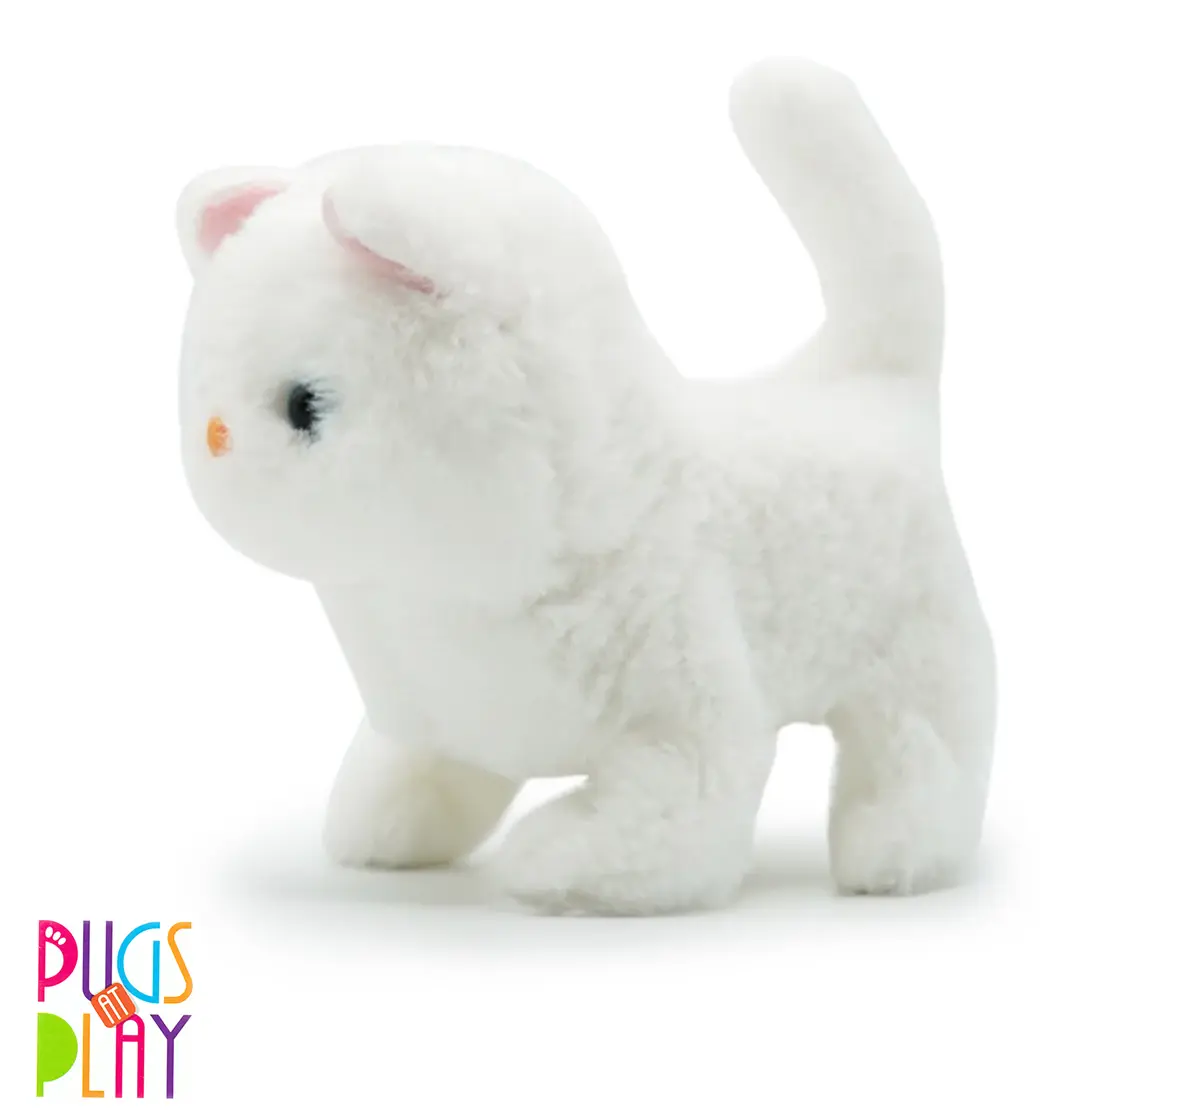 Hamleys Huggable Cuddly Casper Walking Cat Stuffed Toy, Soft Toys For Kids, Cute Plushies Purple, Multicolour, 3Y+